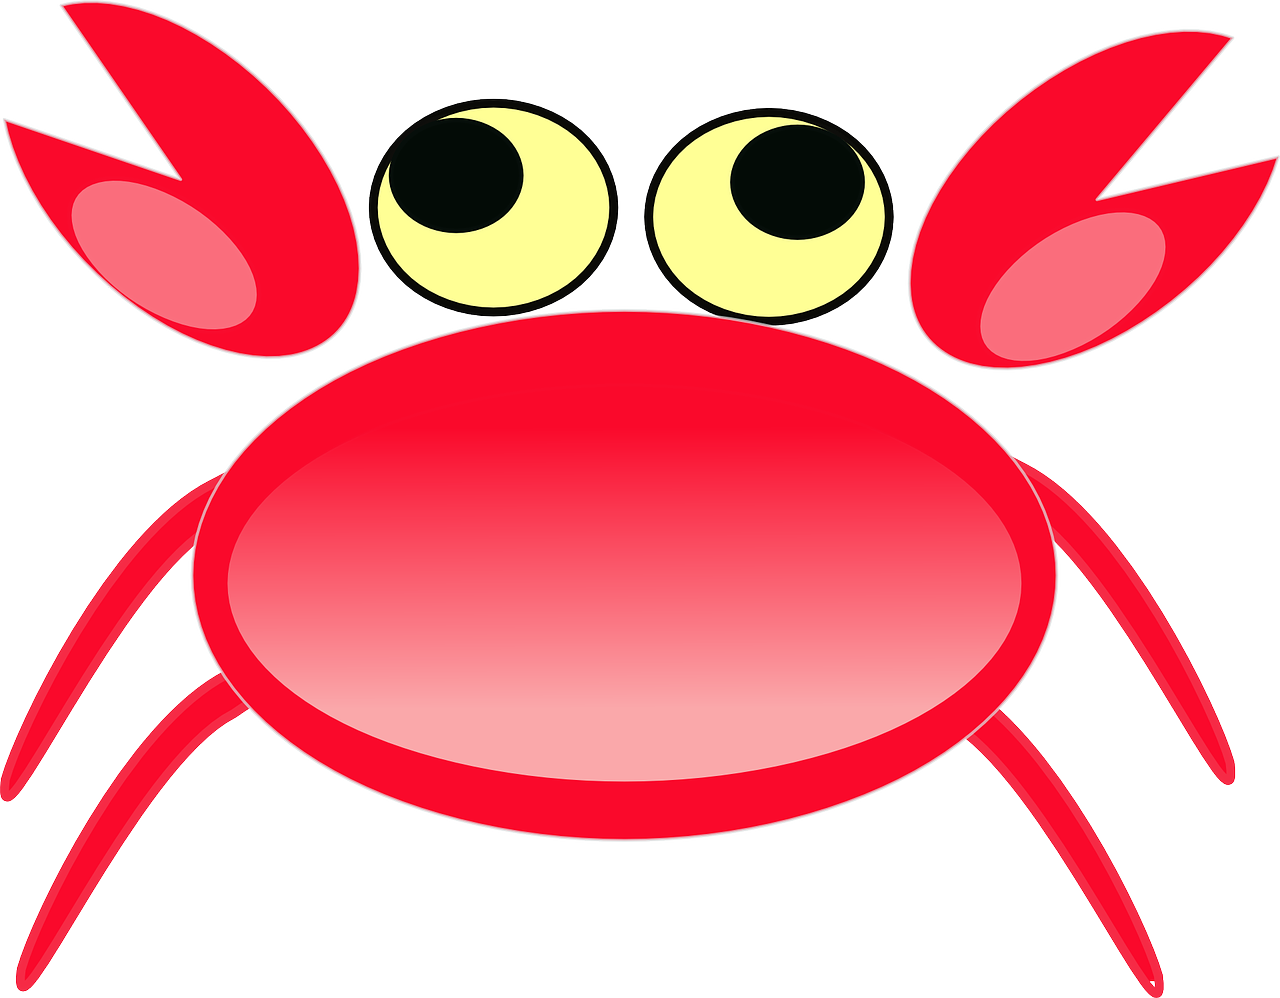 The Vegan Crab